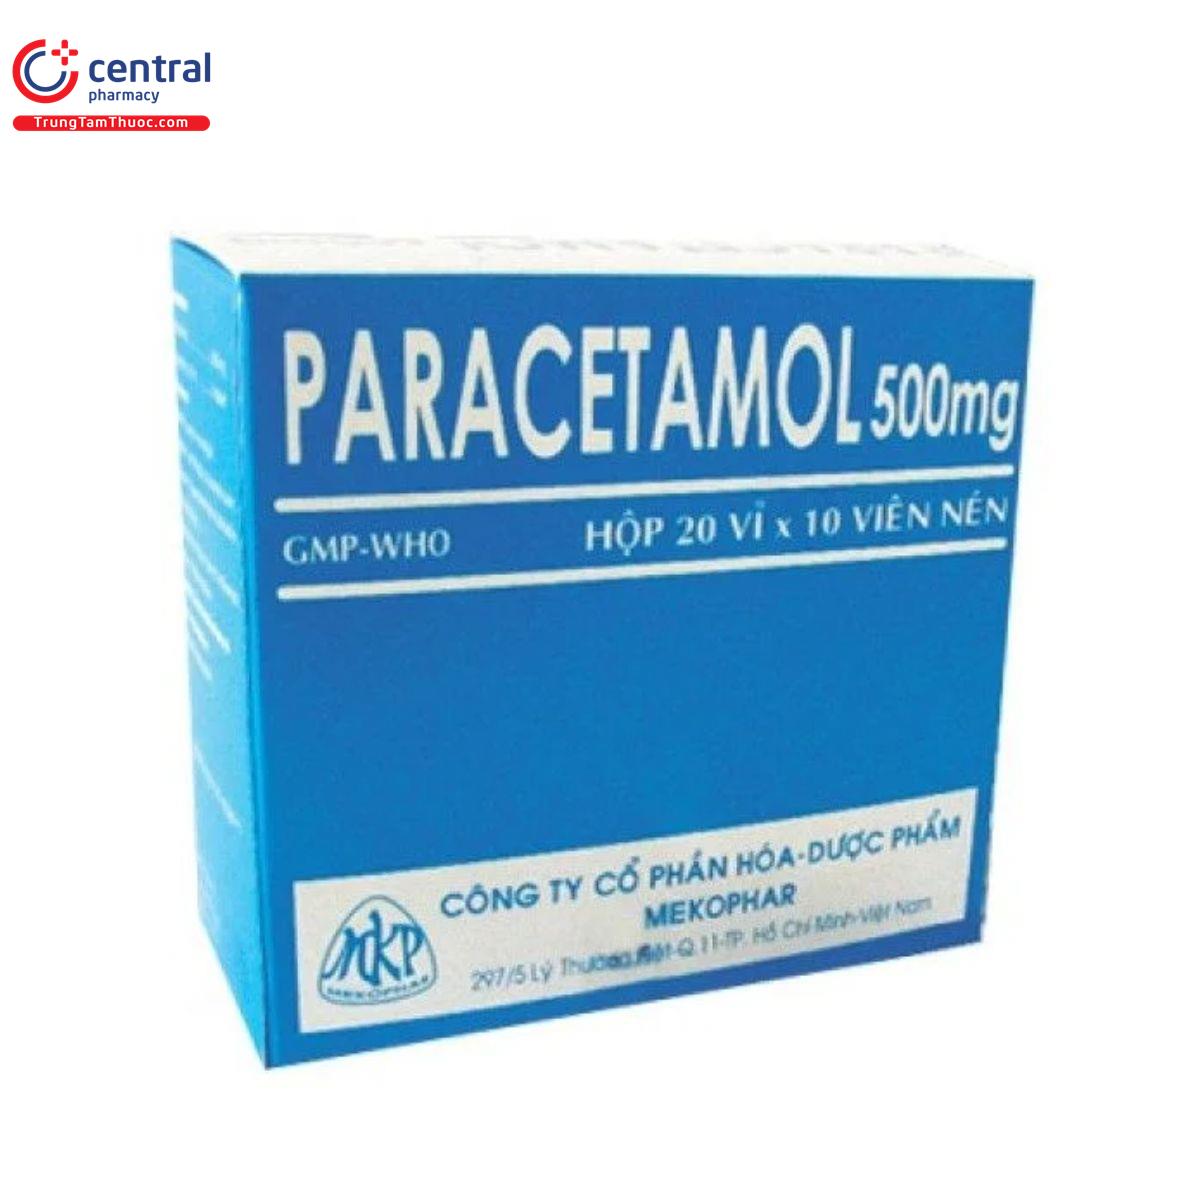 thuoc paracetamol 500mg mekophar 5 L4002